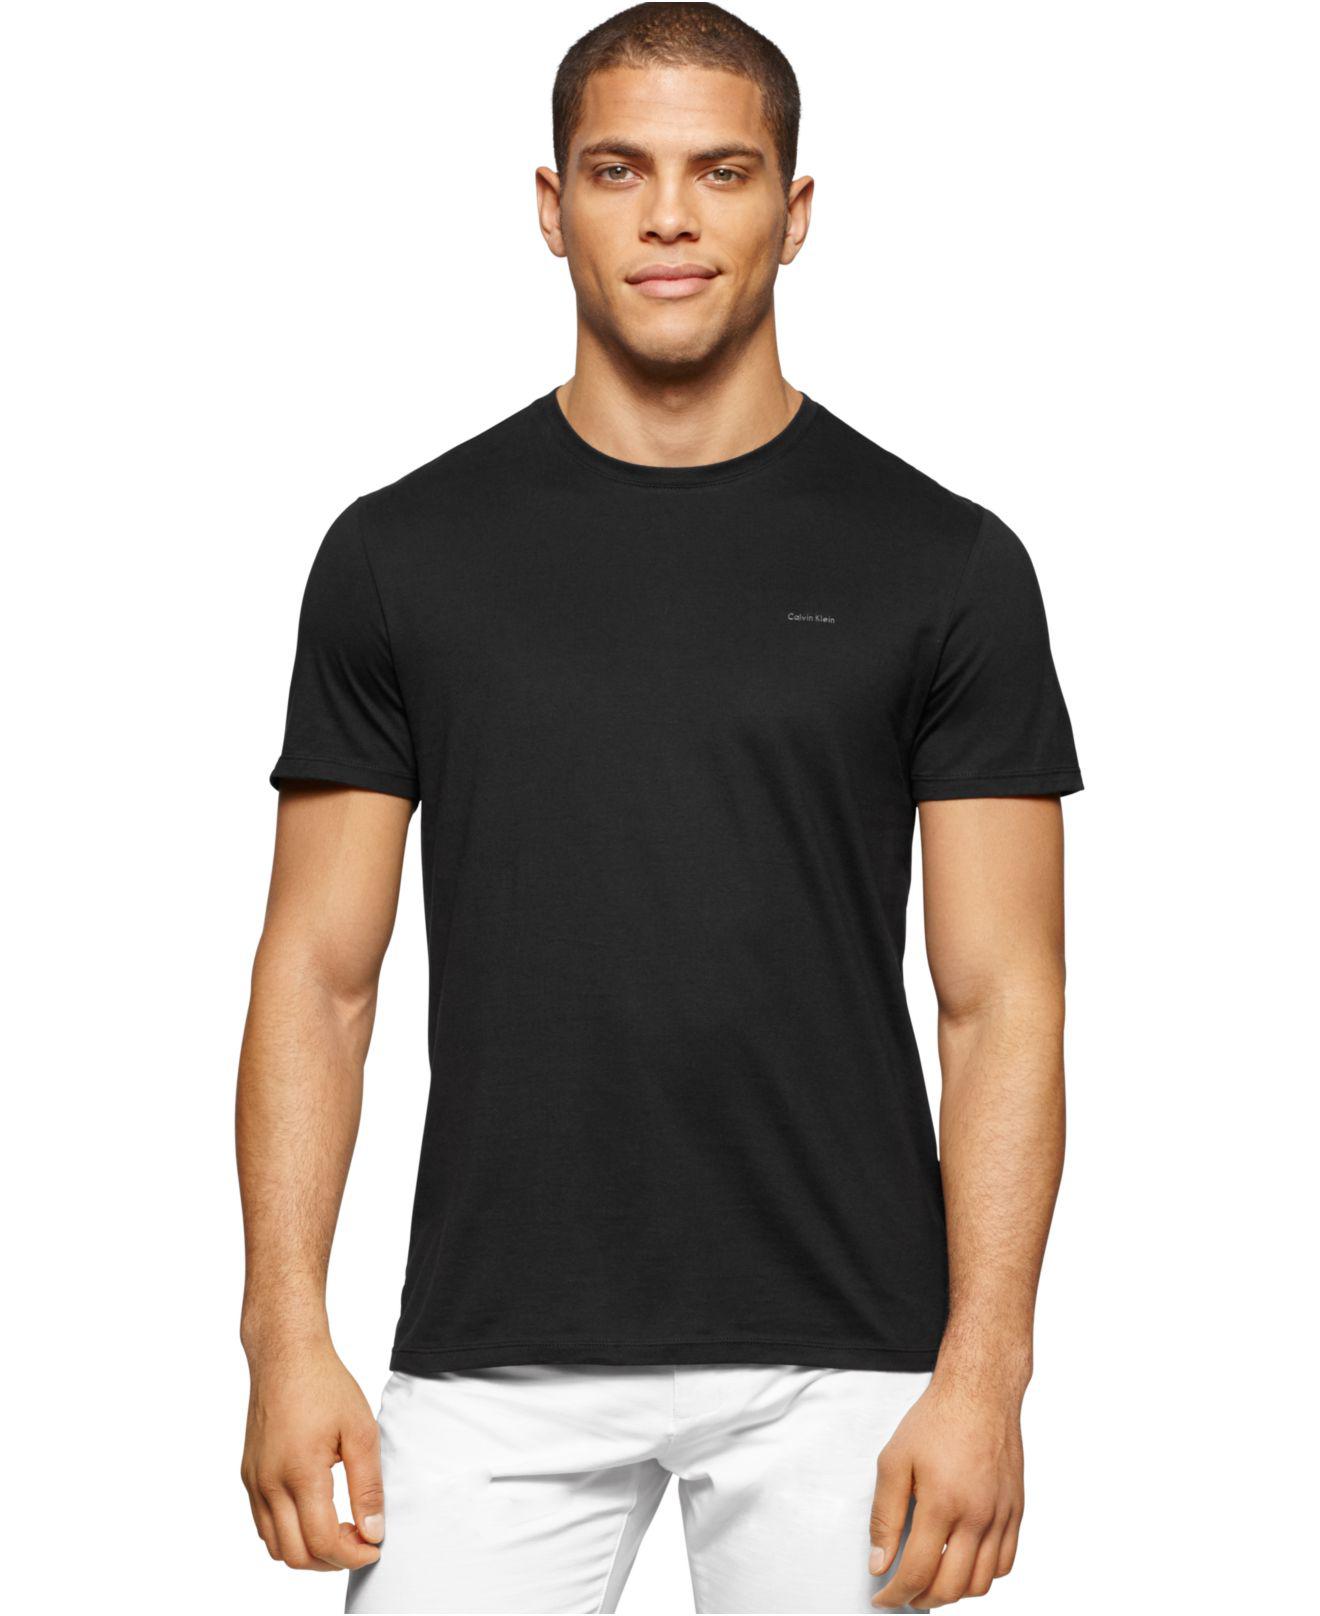 Calvin Klein Slade Solid T-shirt in Black for Men - Lyst